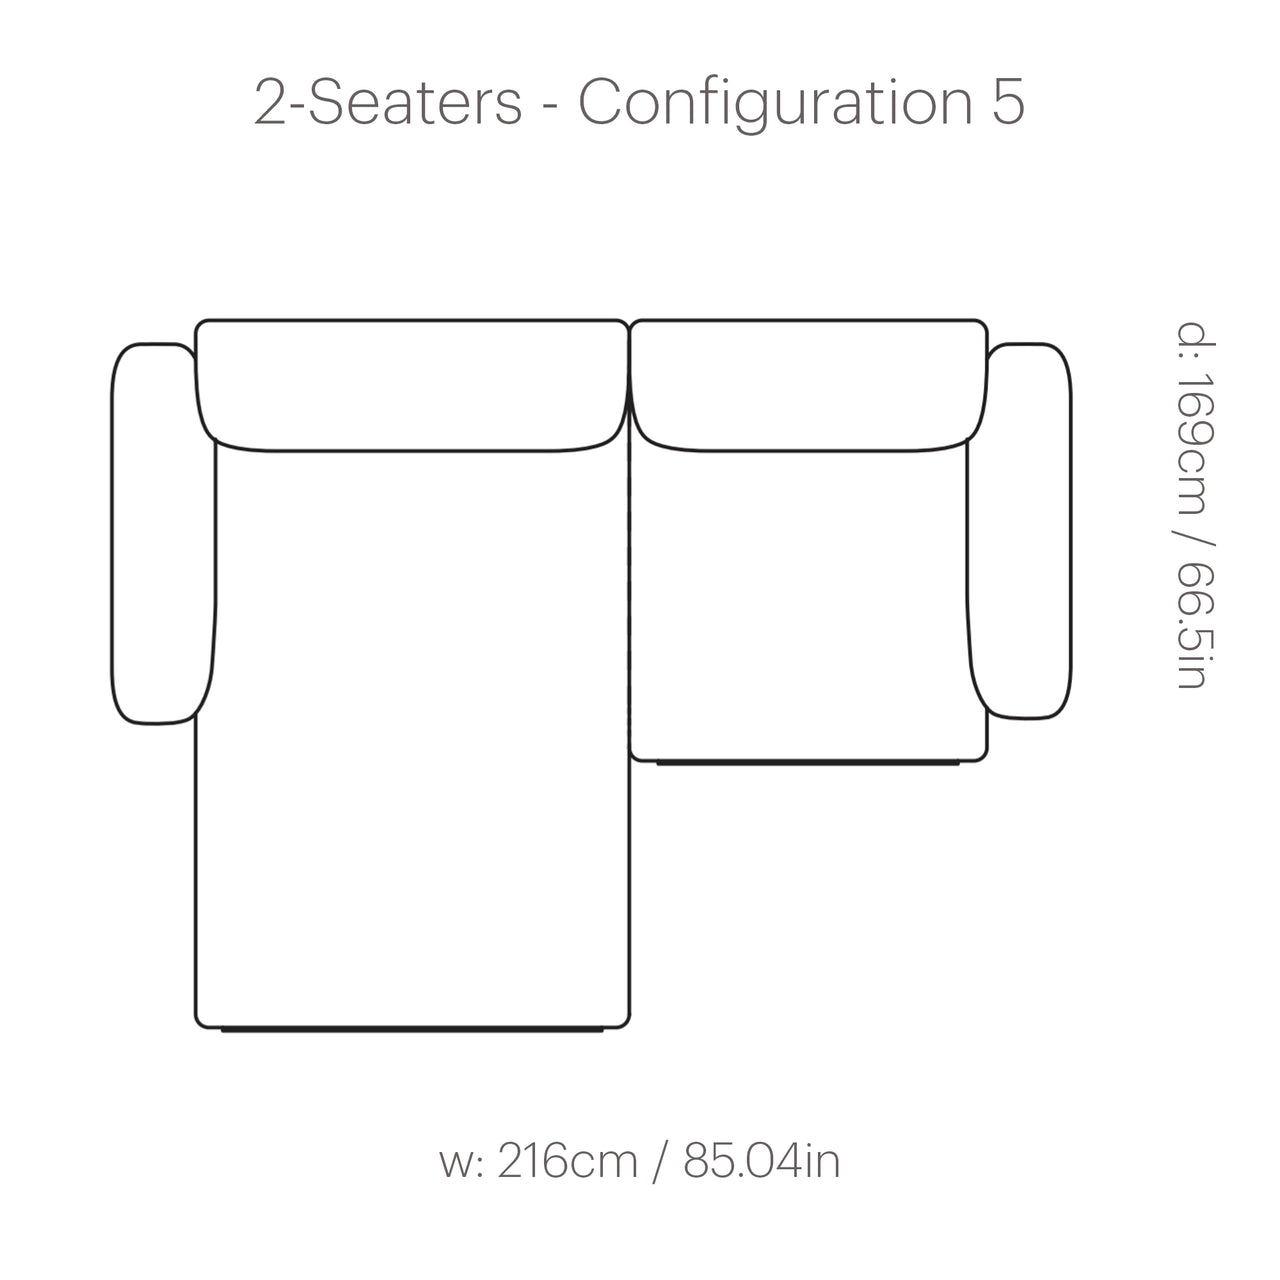 In Situ Modular Sofa: 2 Seater + Configuration 5